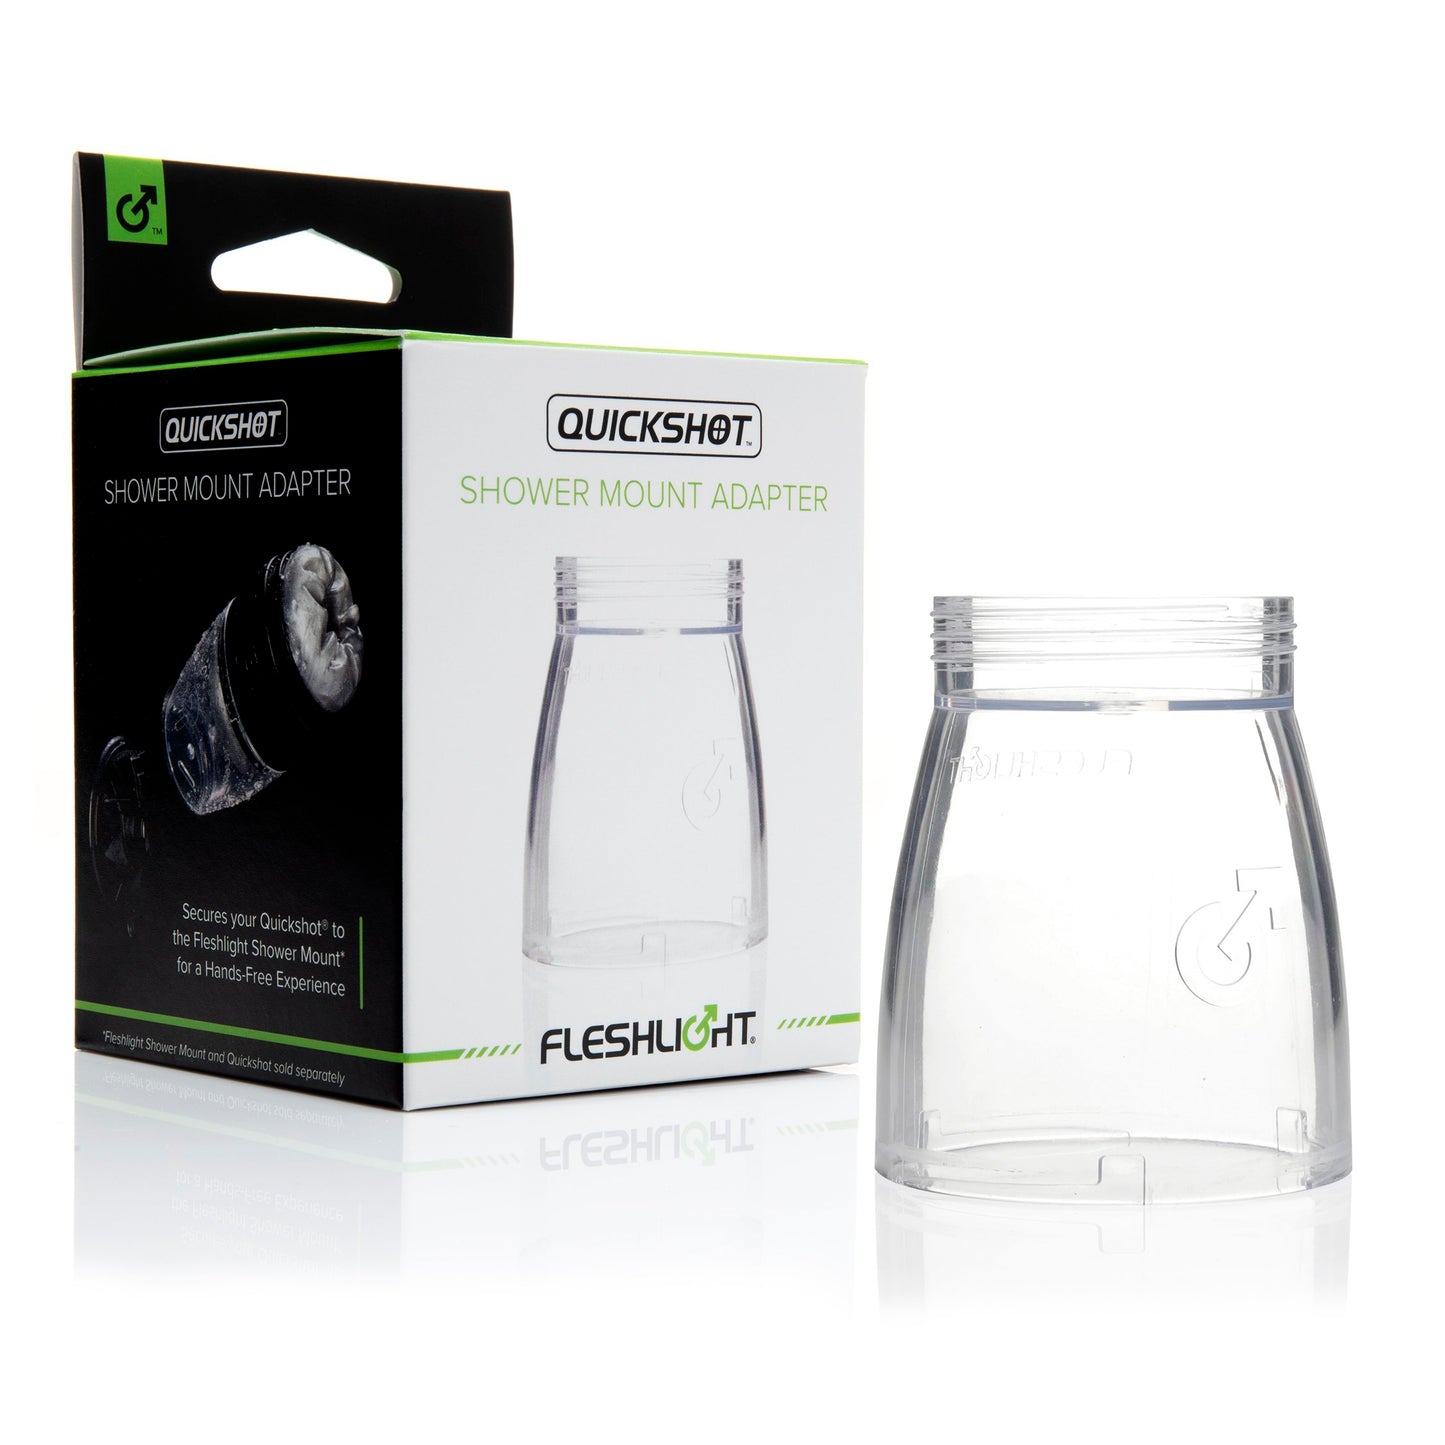 Quickshot Shower Mount Adapter Fleshlight Accessory